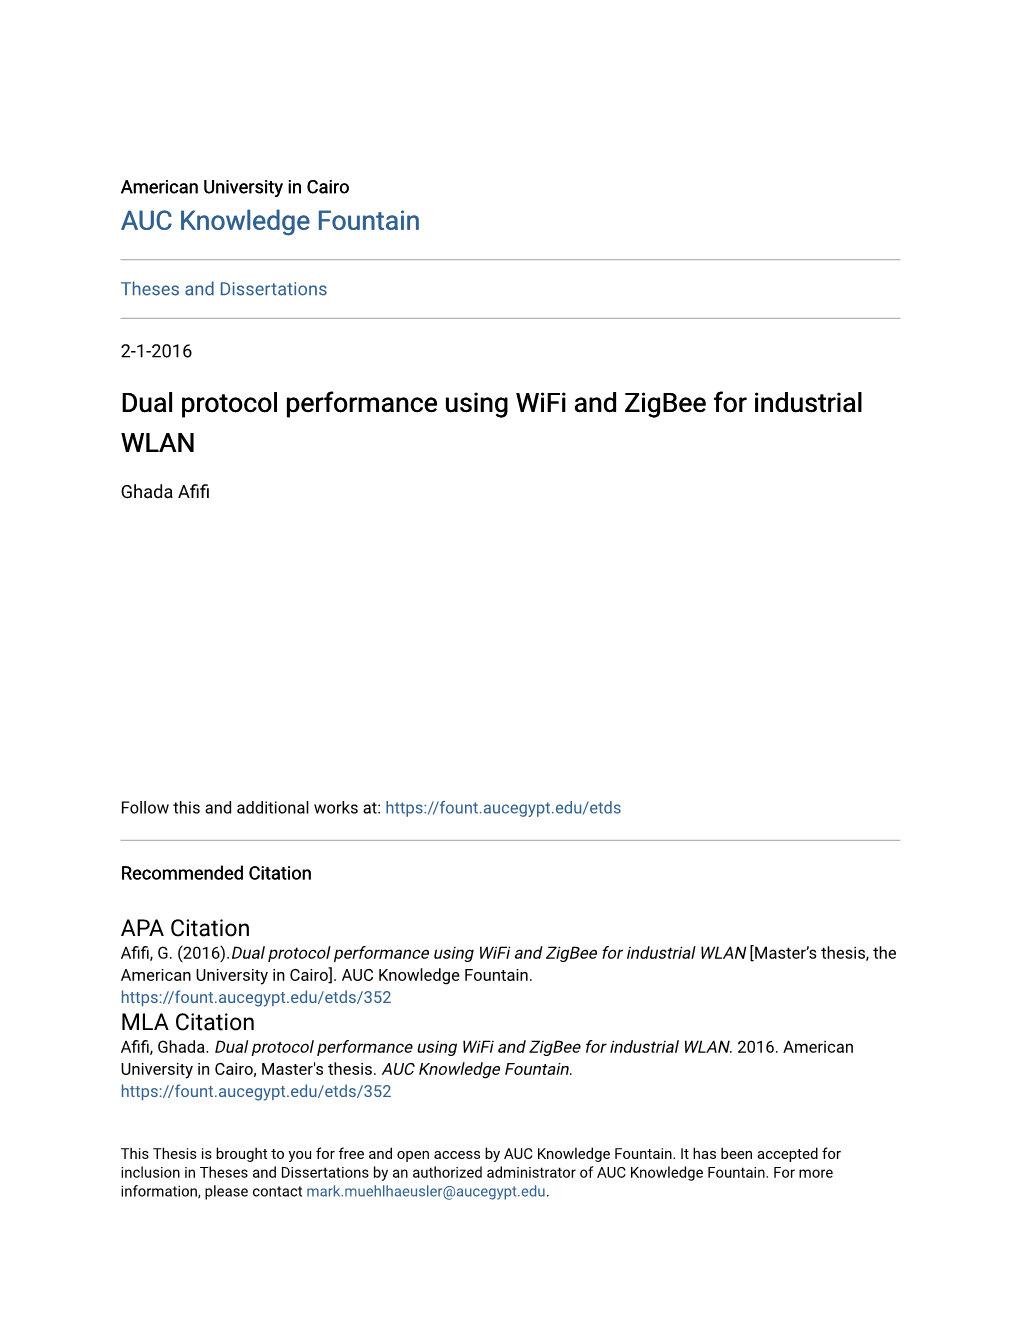 Dual Protocol Performance Using Wifi and Zigbee for Industrial WLAN